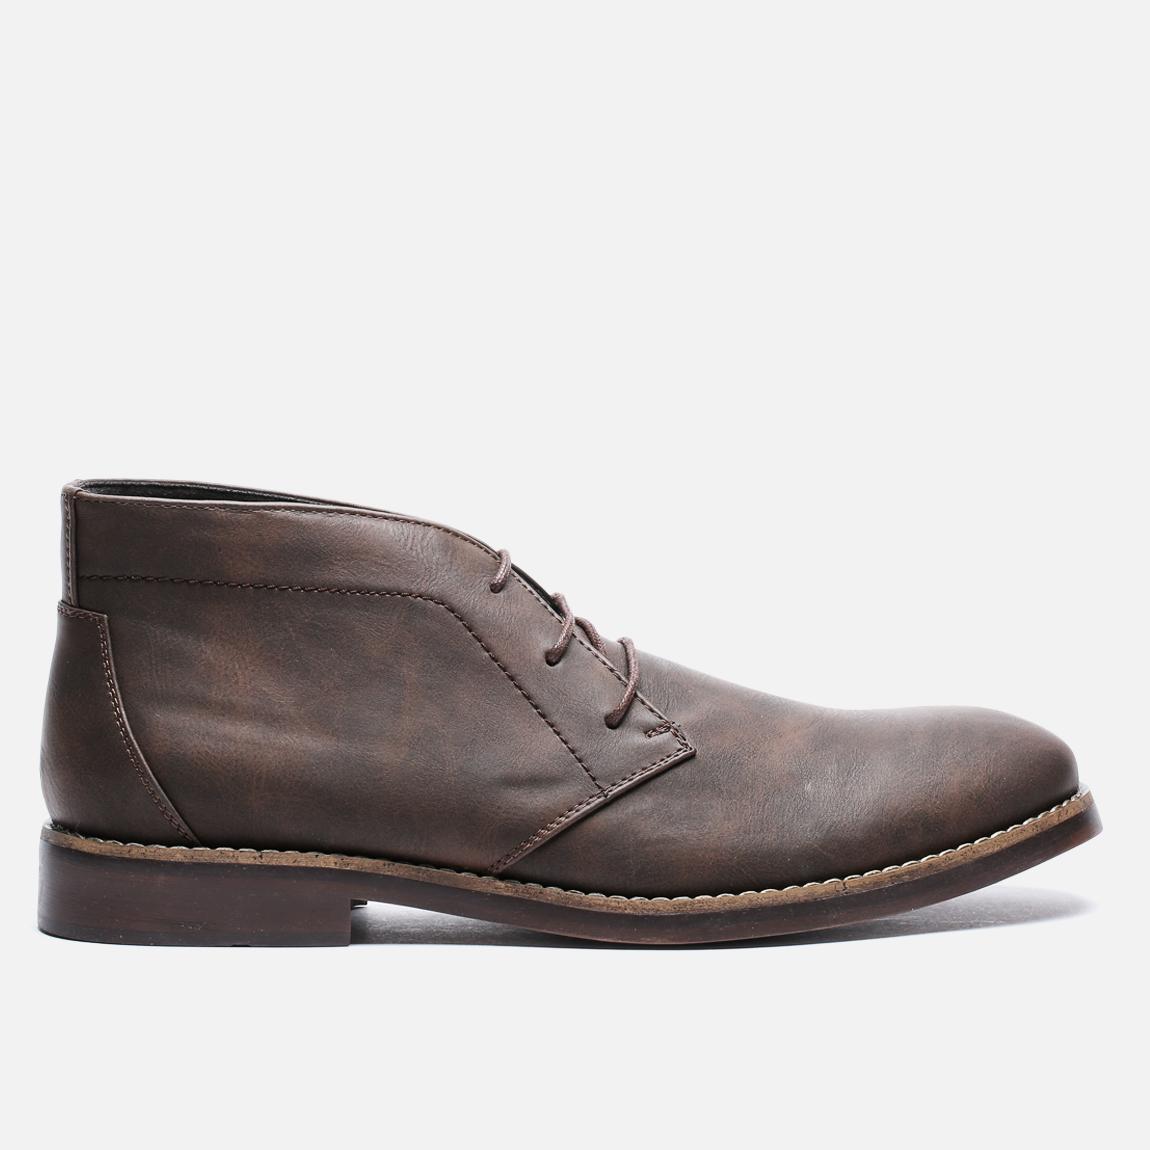 Kingston Nubuck Boot - brown New Look Boots | Superbalist.com